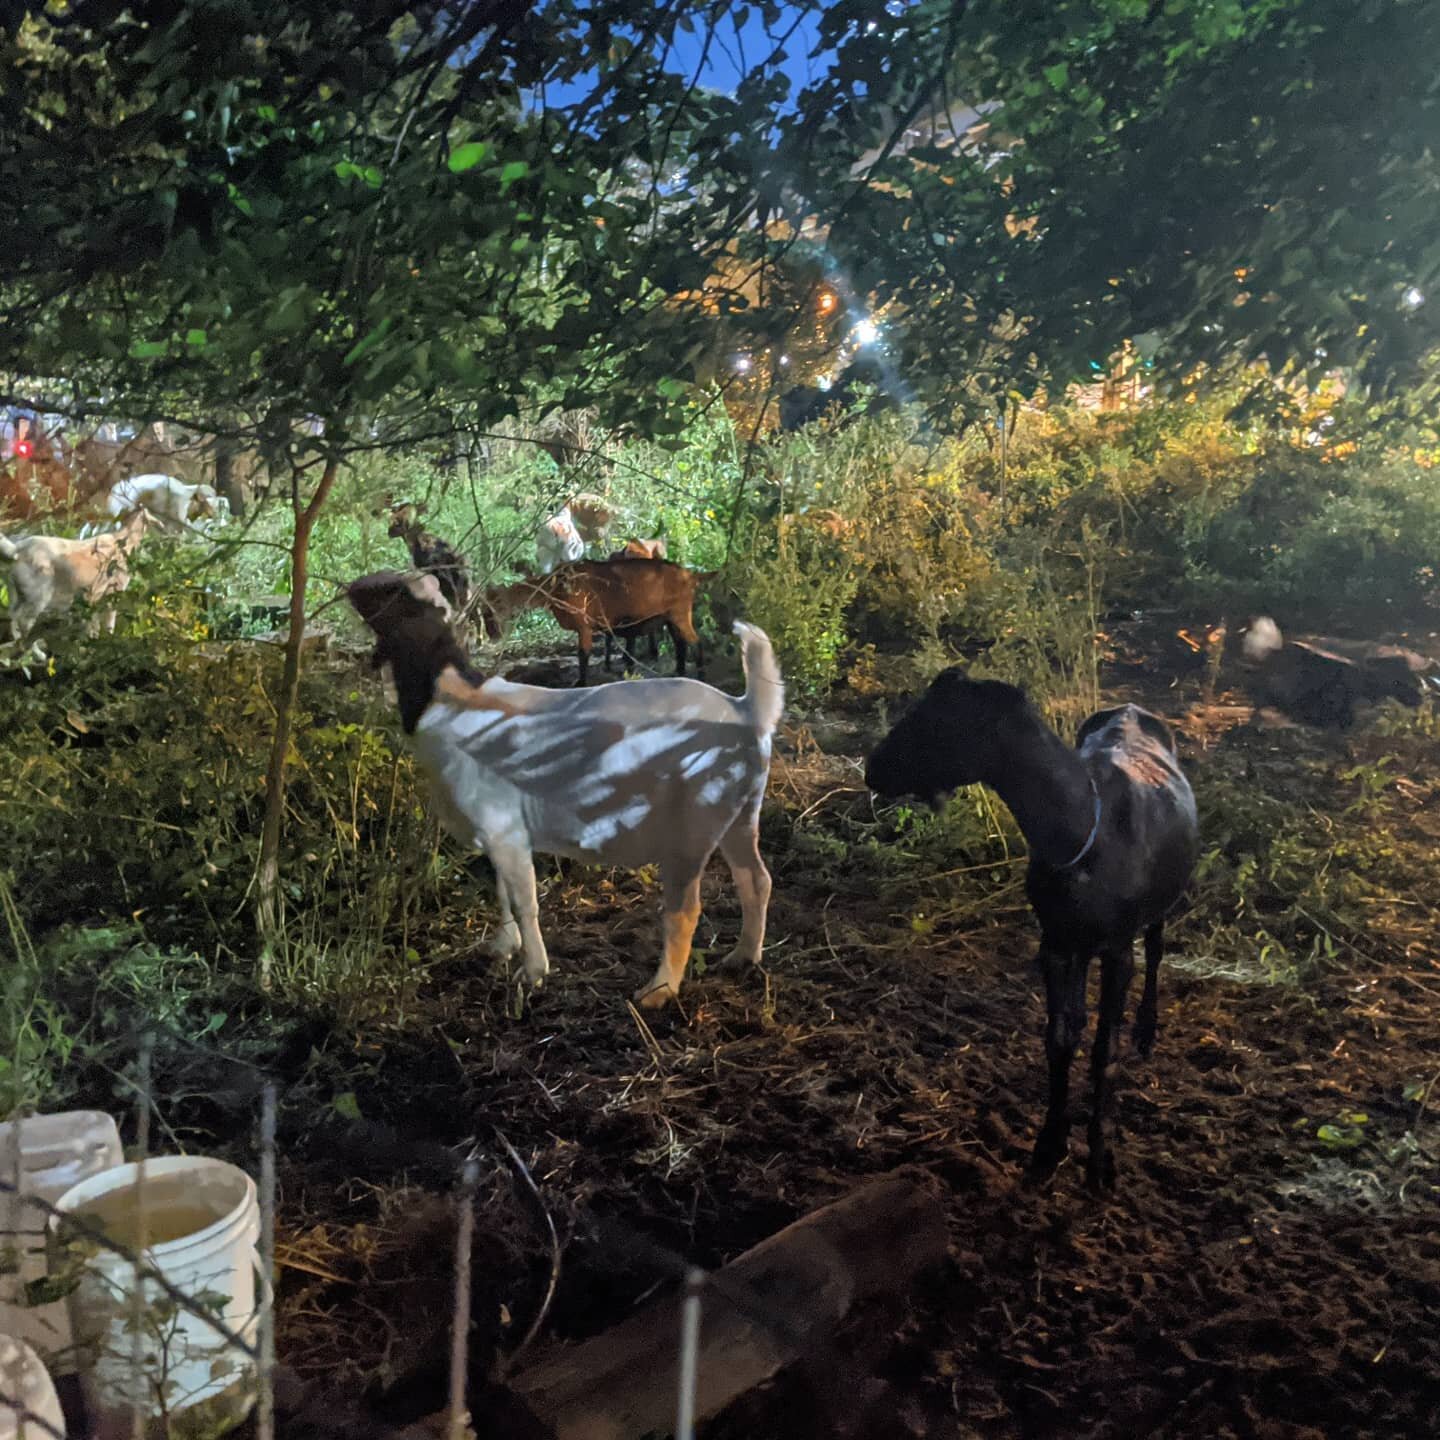 #goats #weedcontrol #urbanfarm